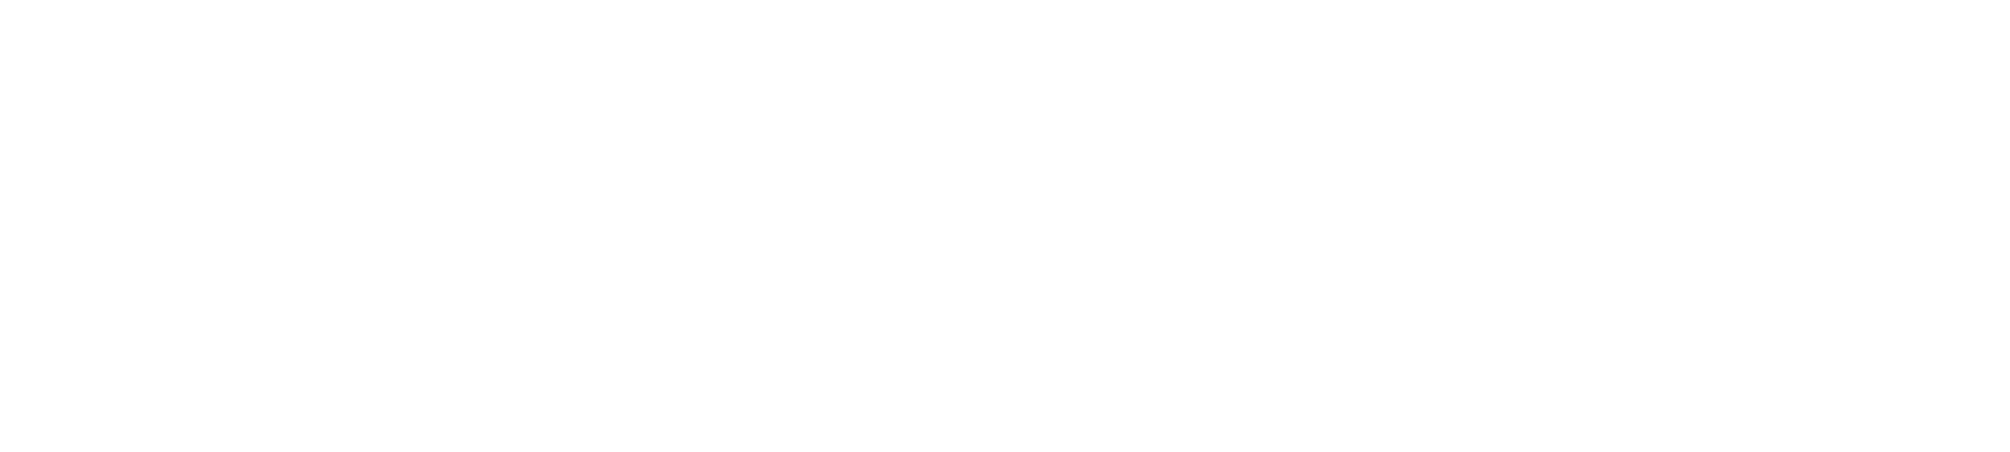 Iris galerij logo